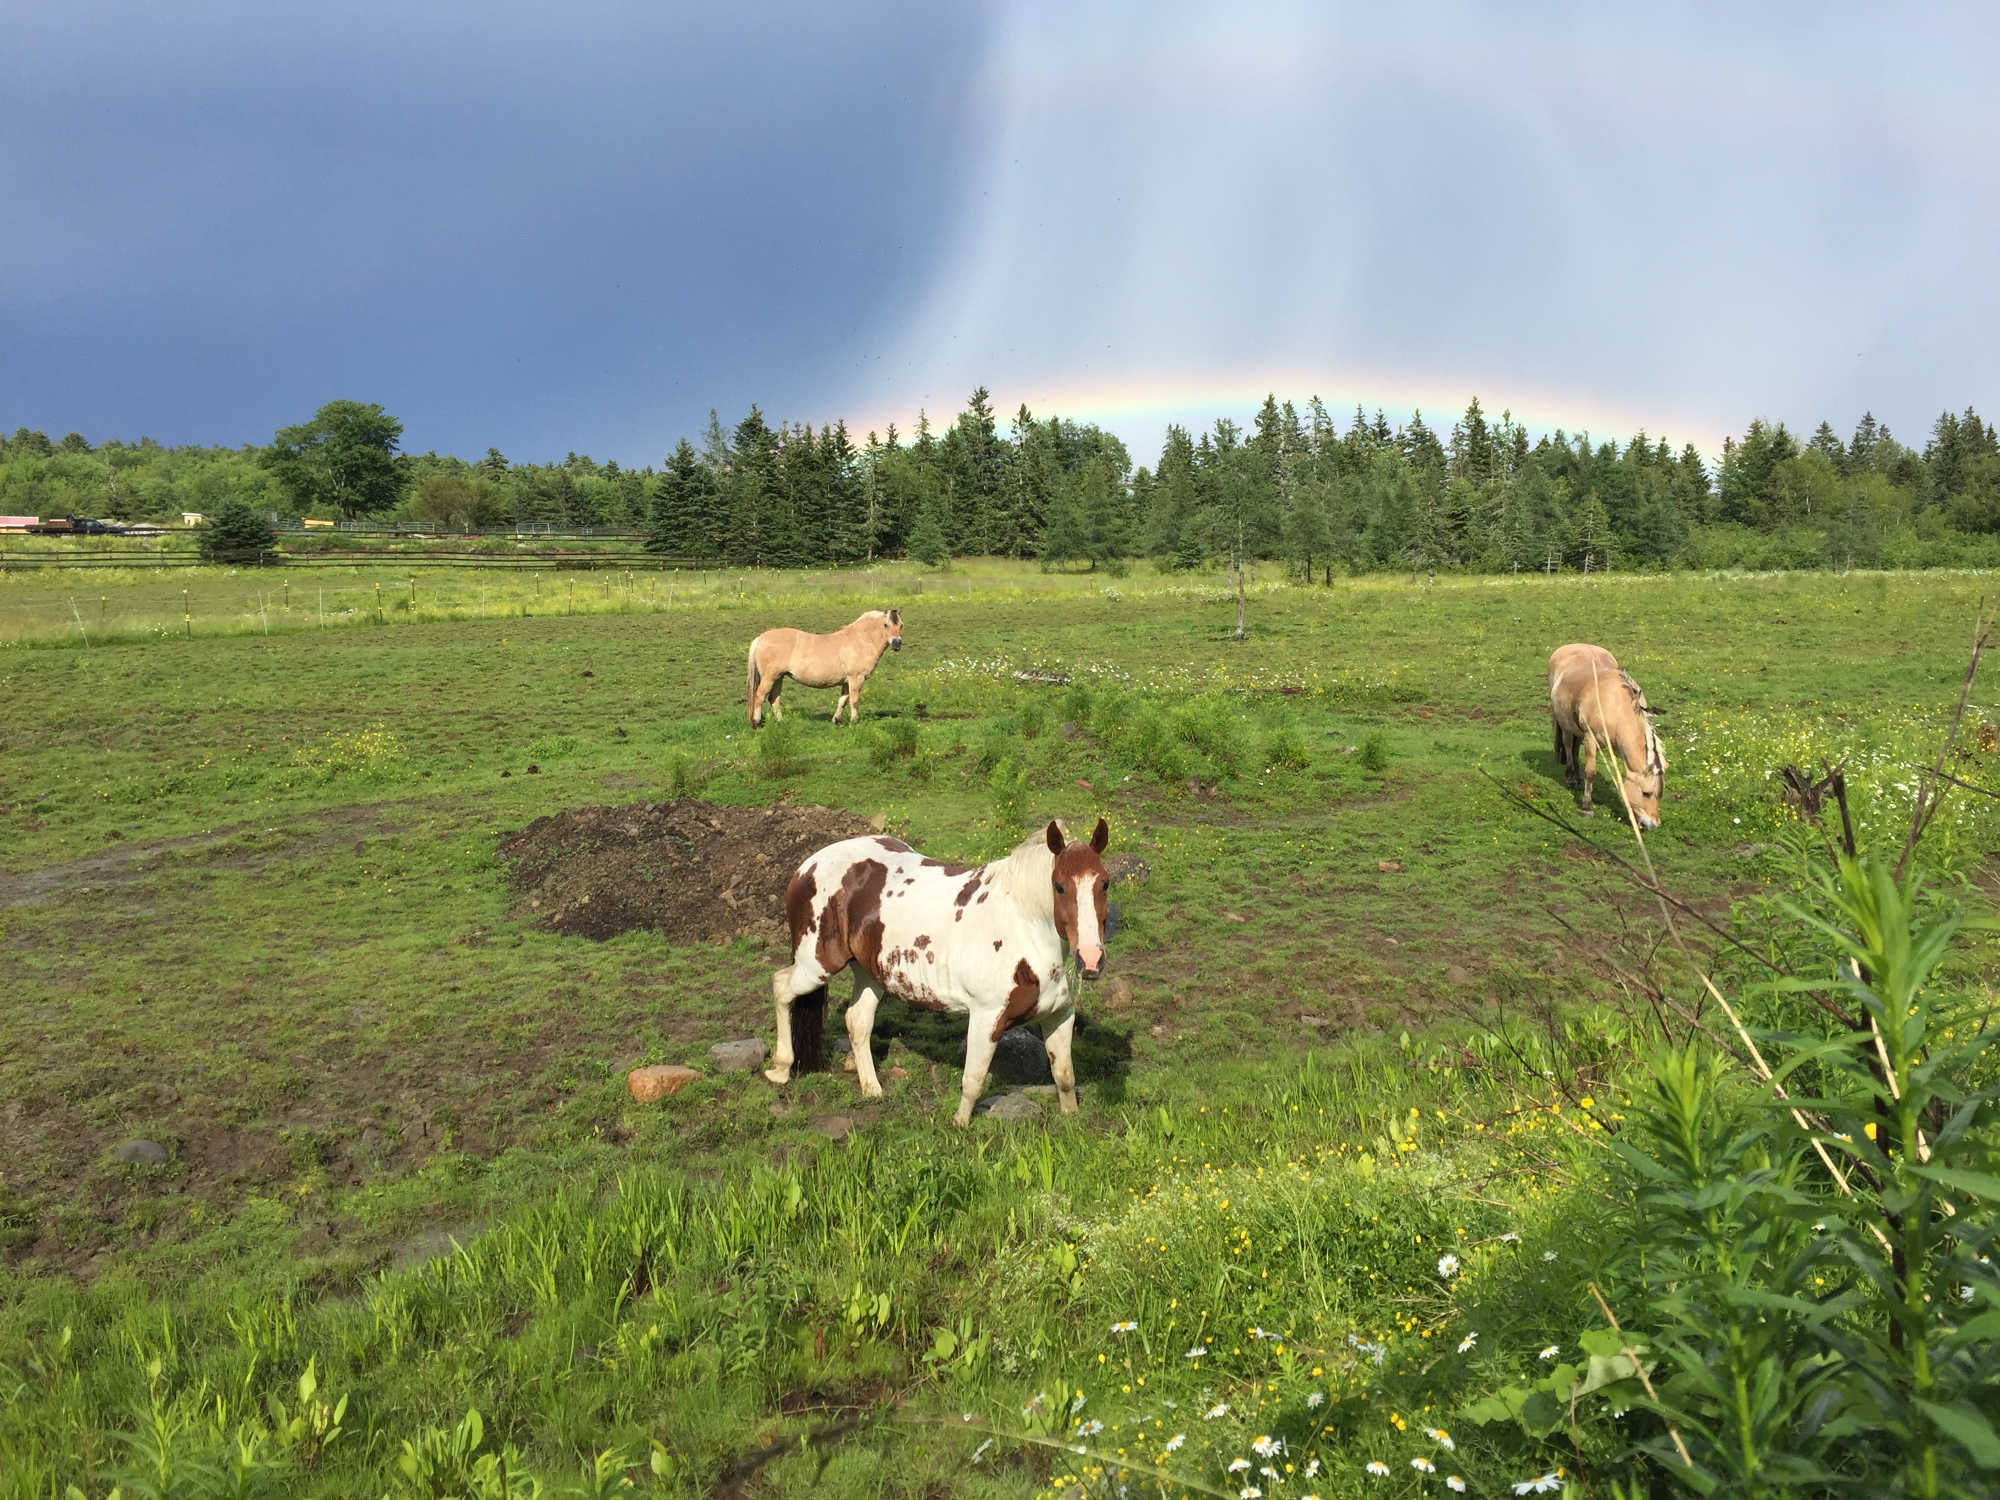 Three horses in a field under a rainbow.